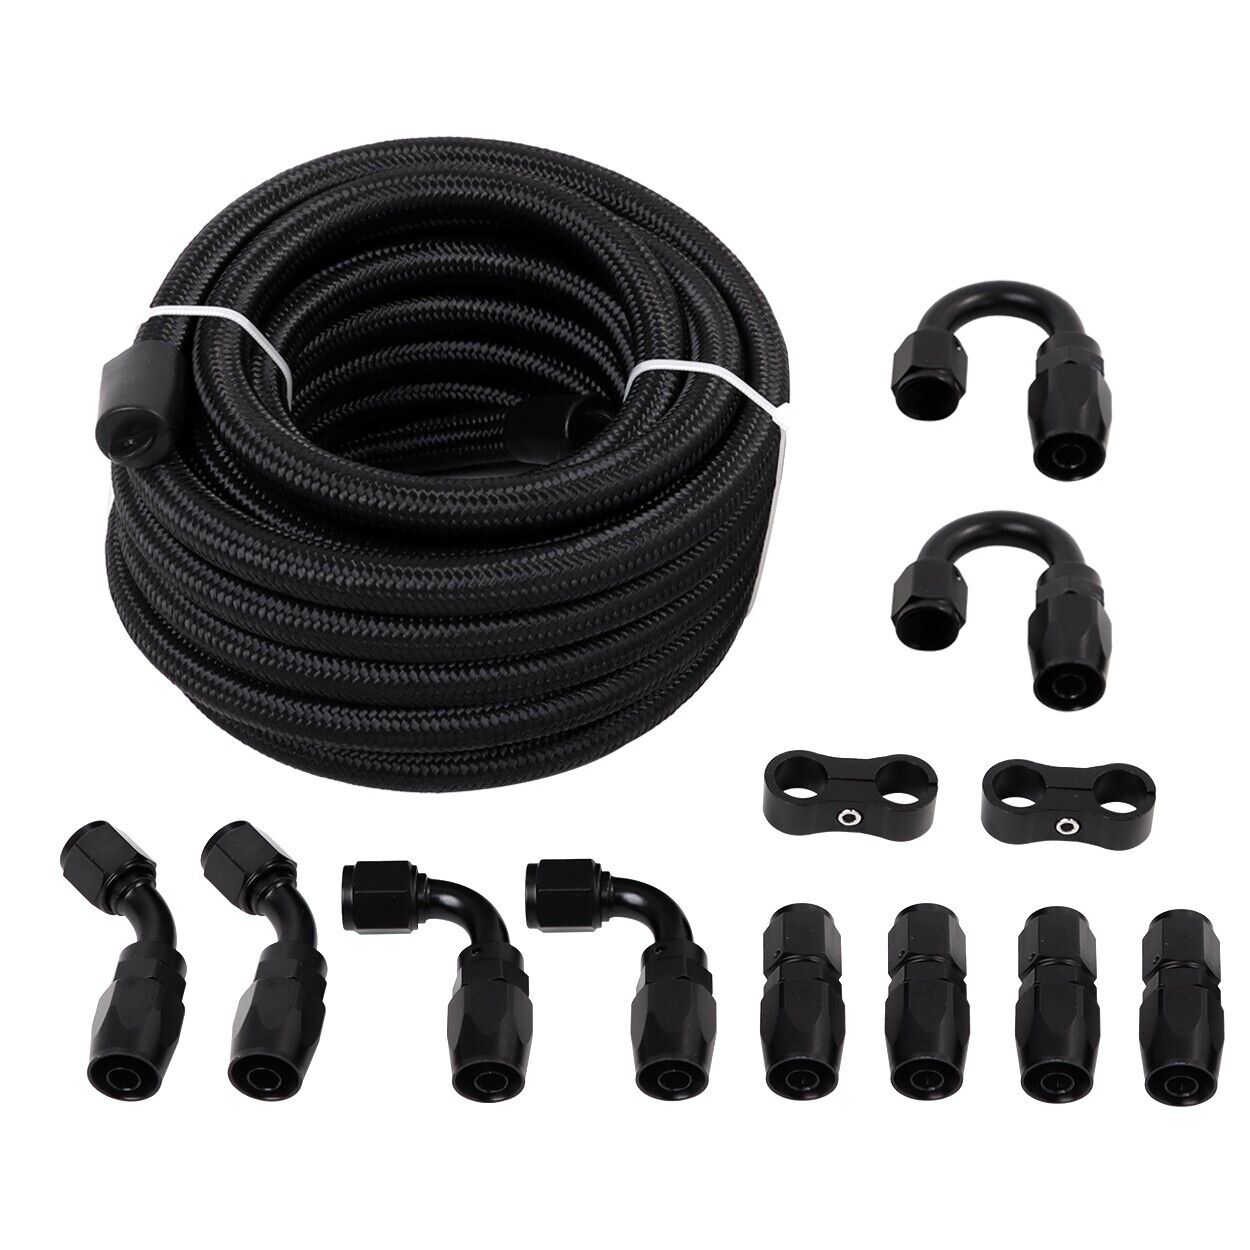 LokoCar 8AN Fuel Line Kit Nylon Braided Fuel Hose Fitting Kit CPE 20FT Black